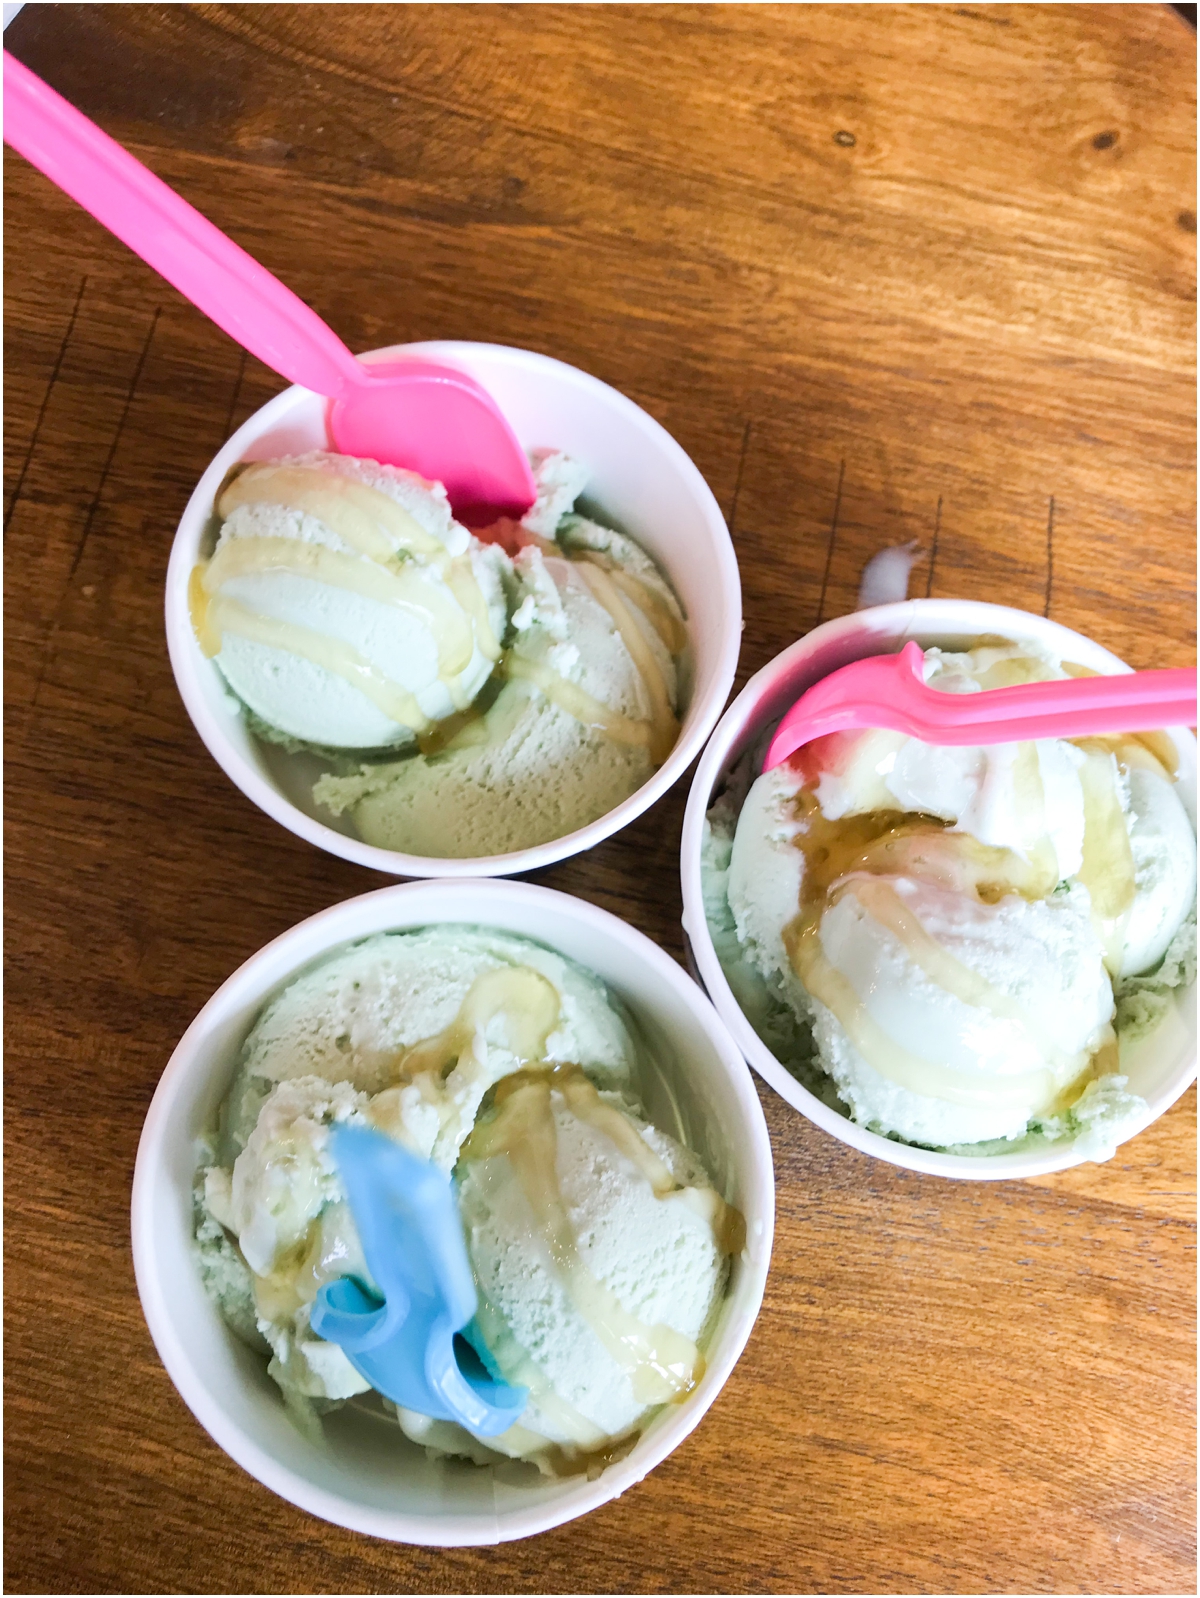 Green tea ice cream at hub city scoops in Spartanburg, SC